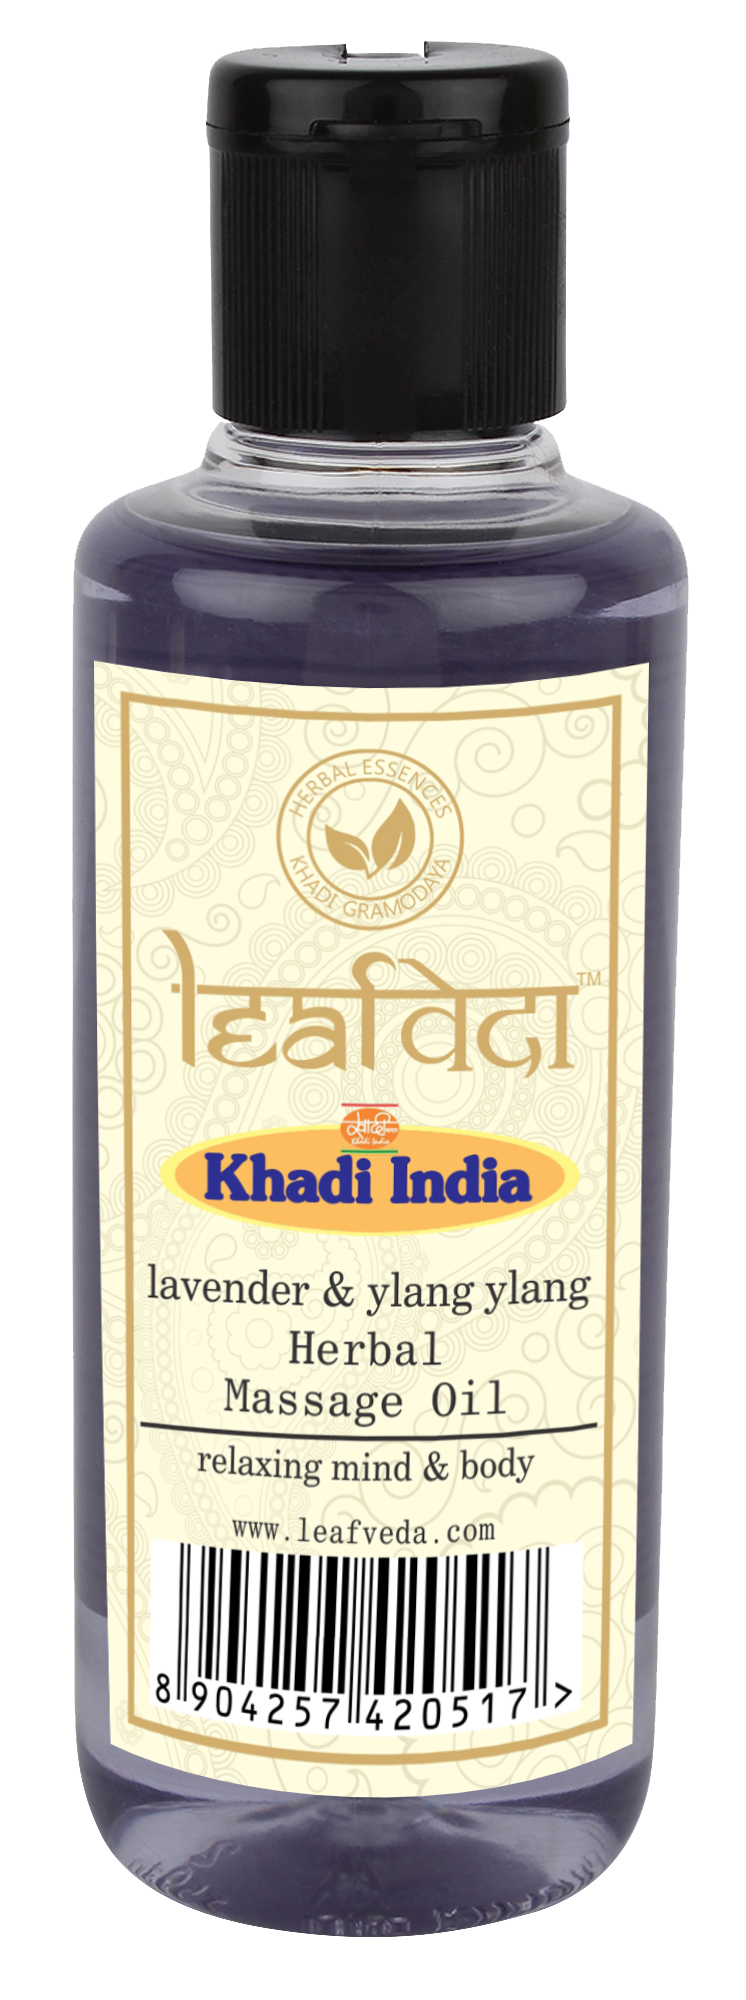 Buy Khadi Leafveda Lavender & Ylang Ylang Massage Oil at Best Price Online